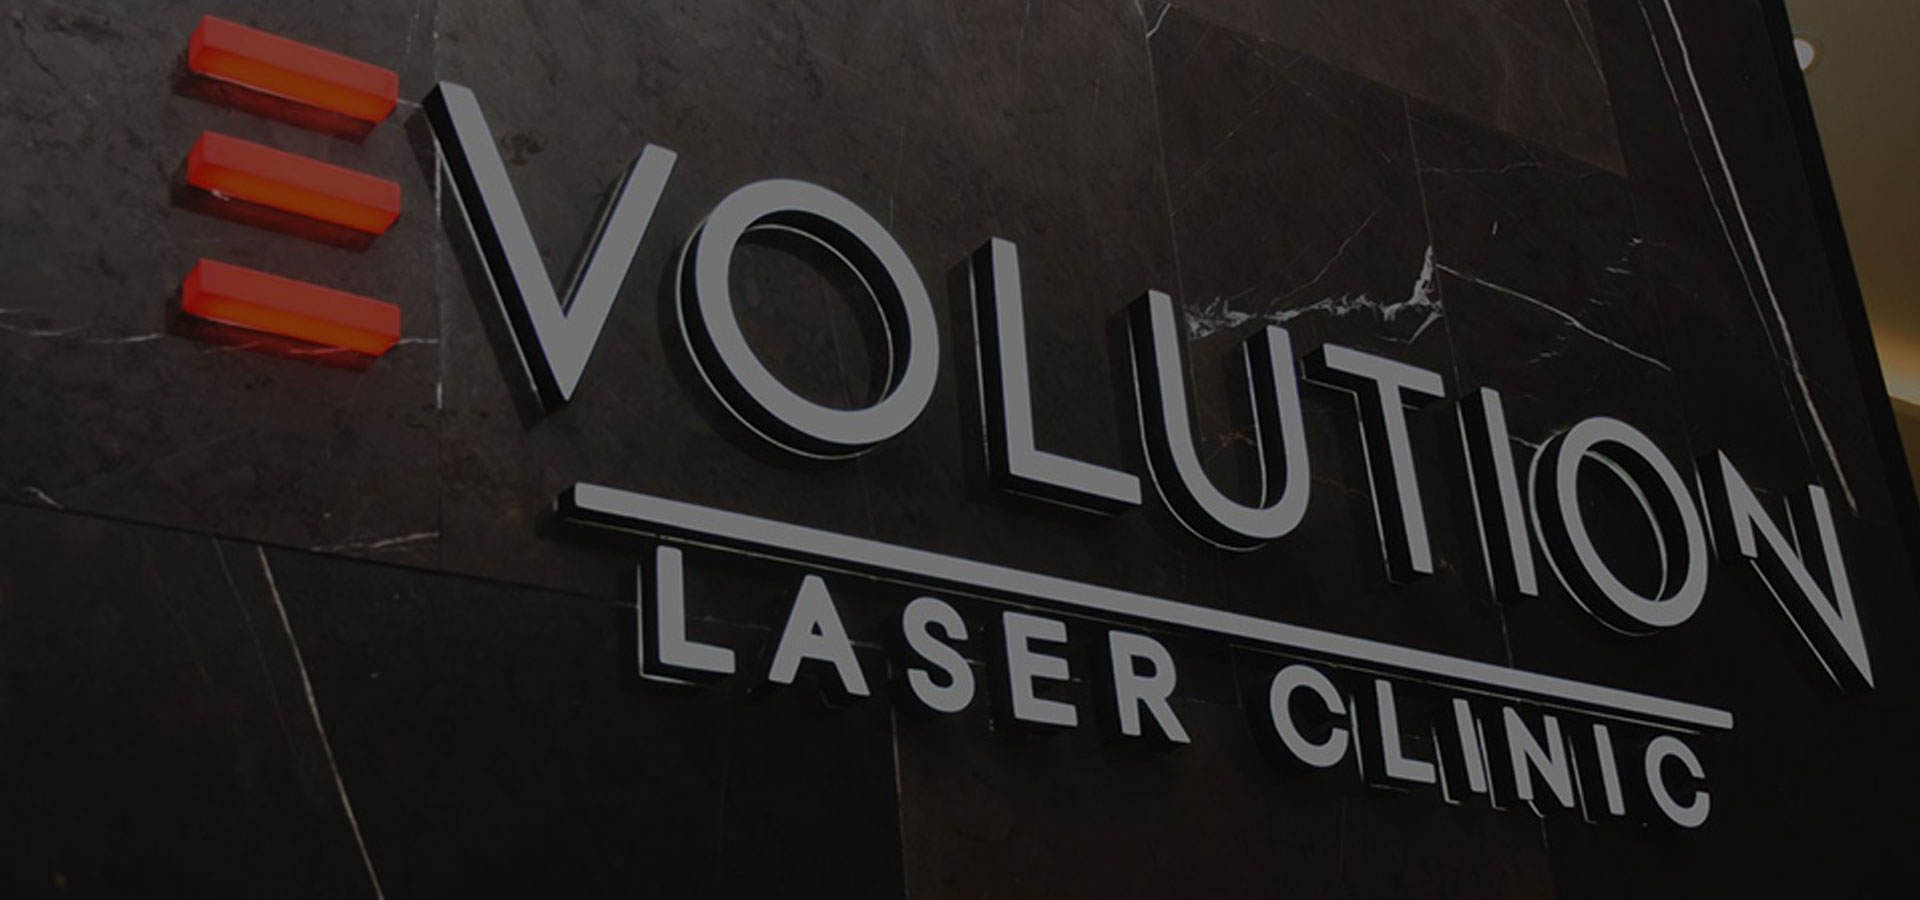 Evolution Laser Clinic